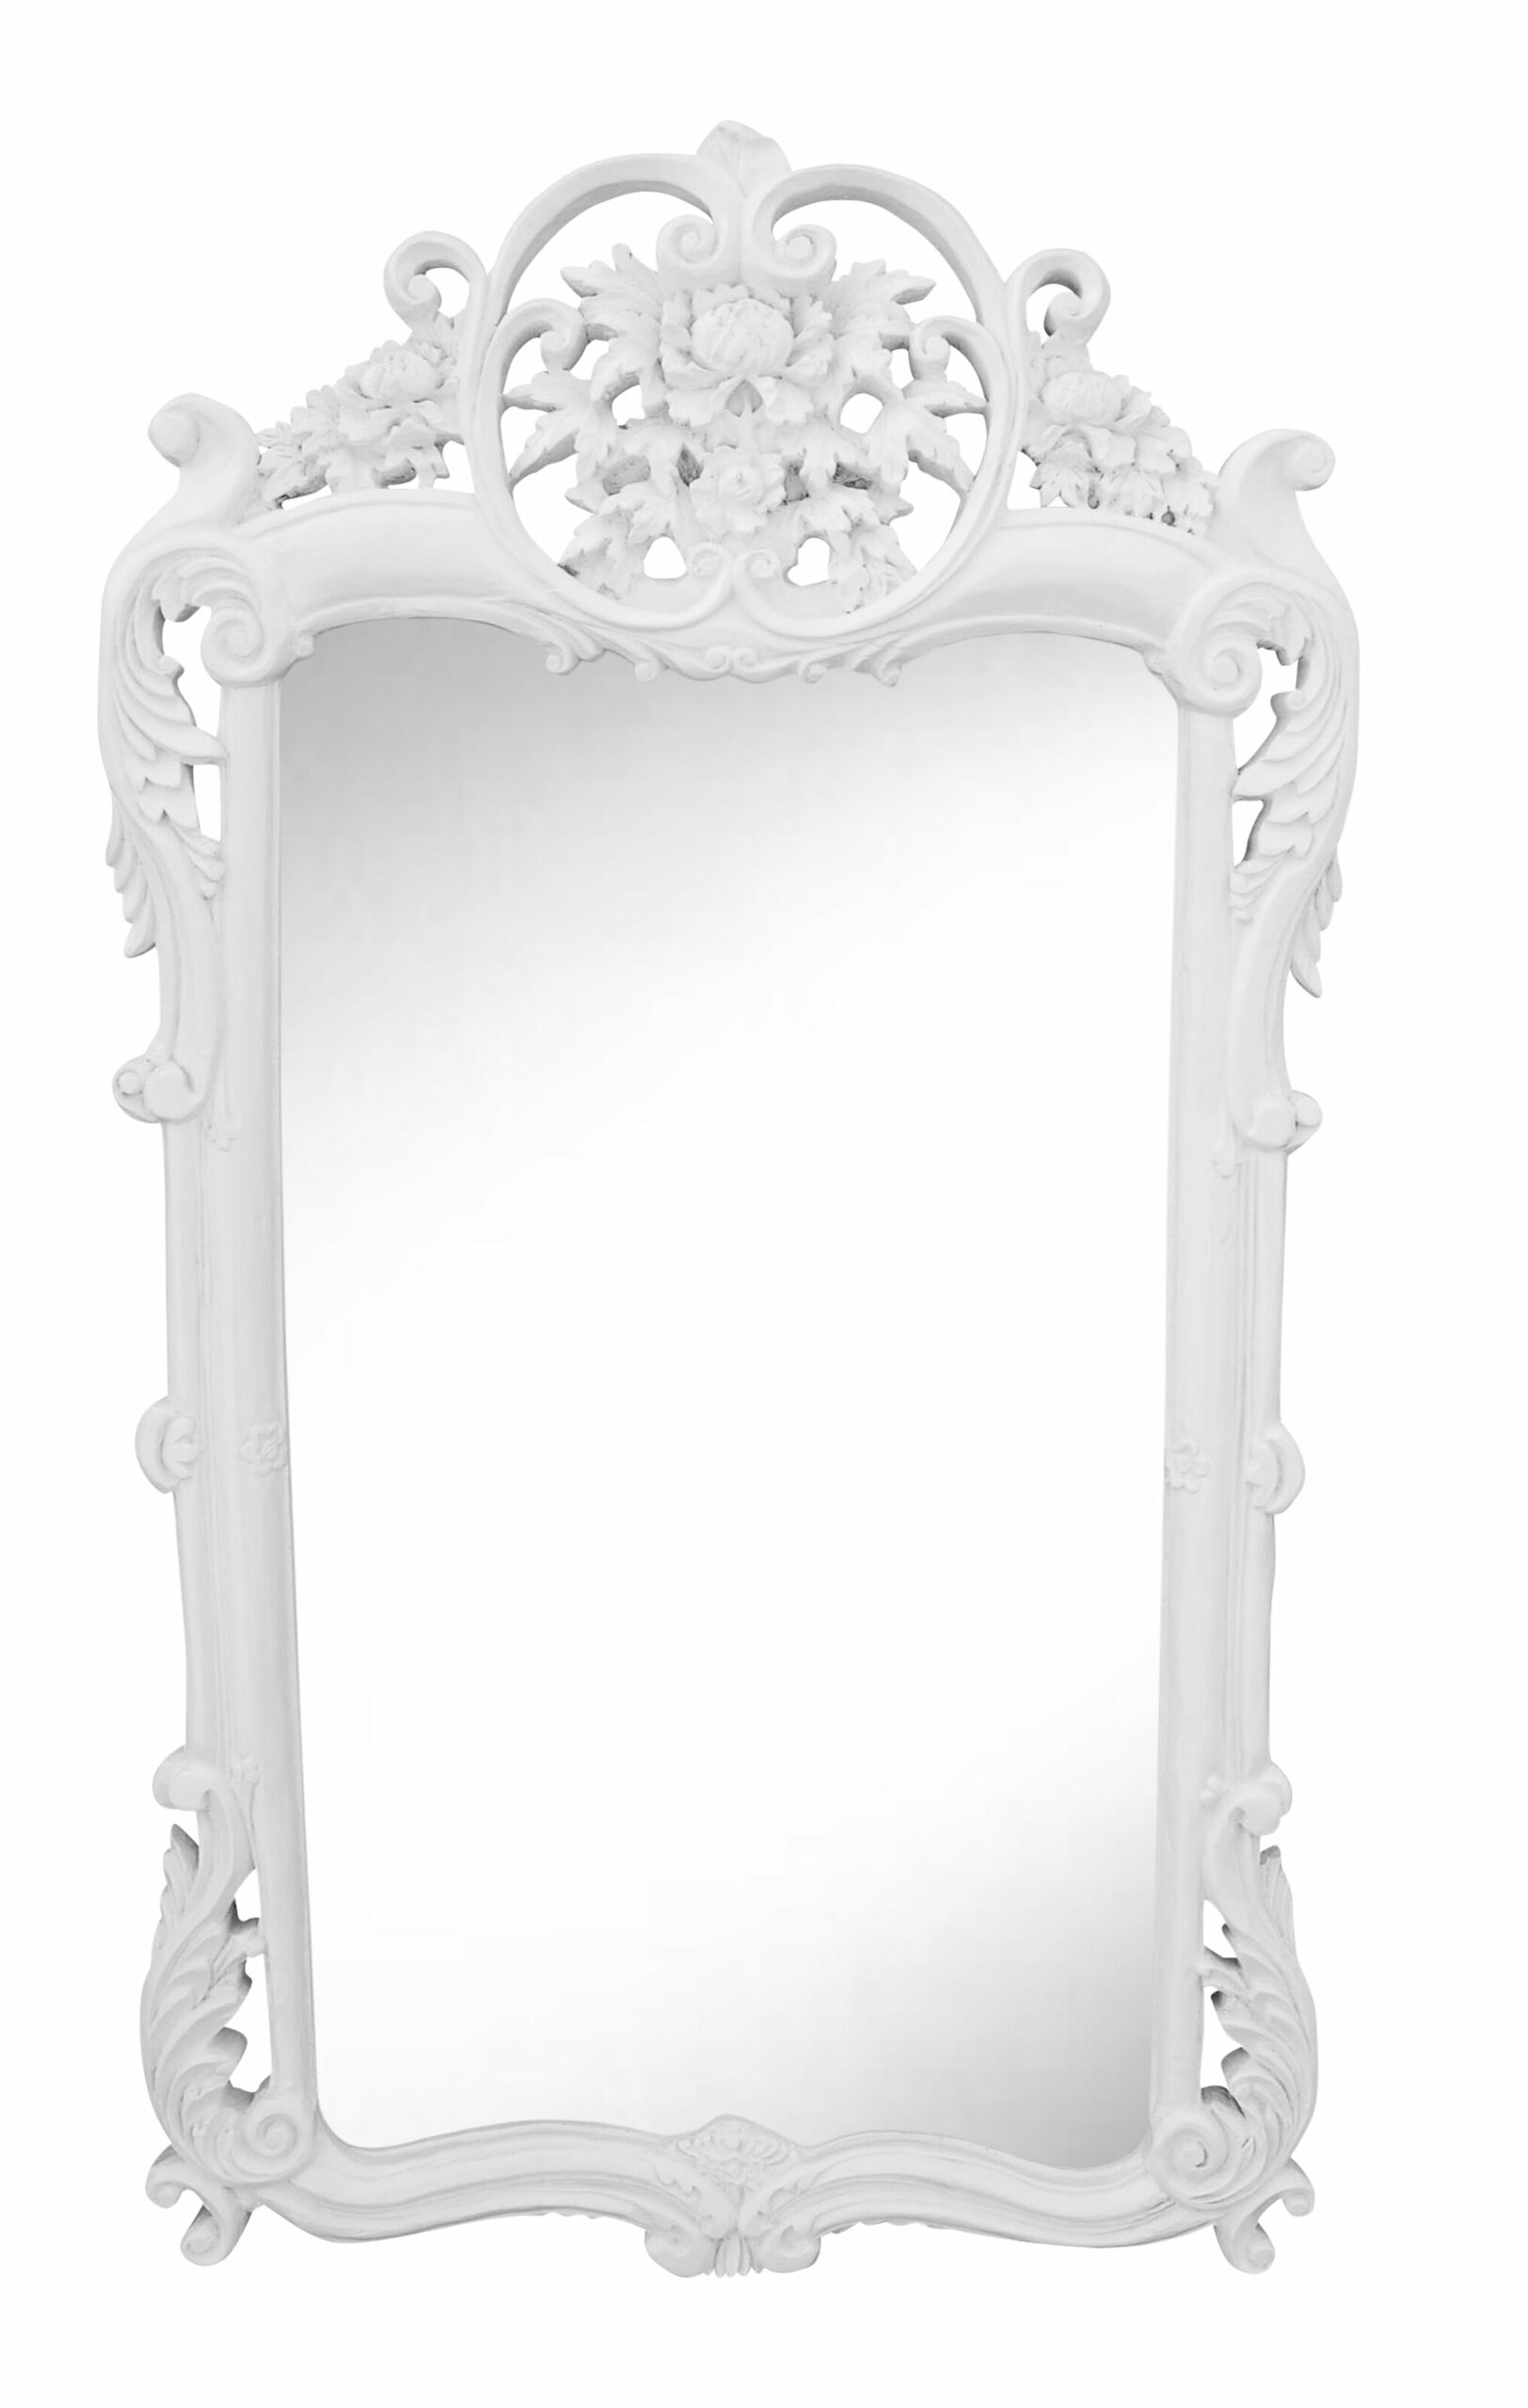 Ornate white mirror.